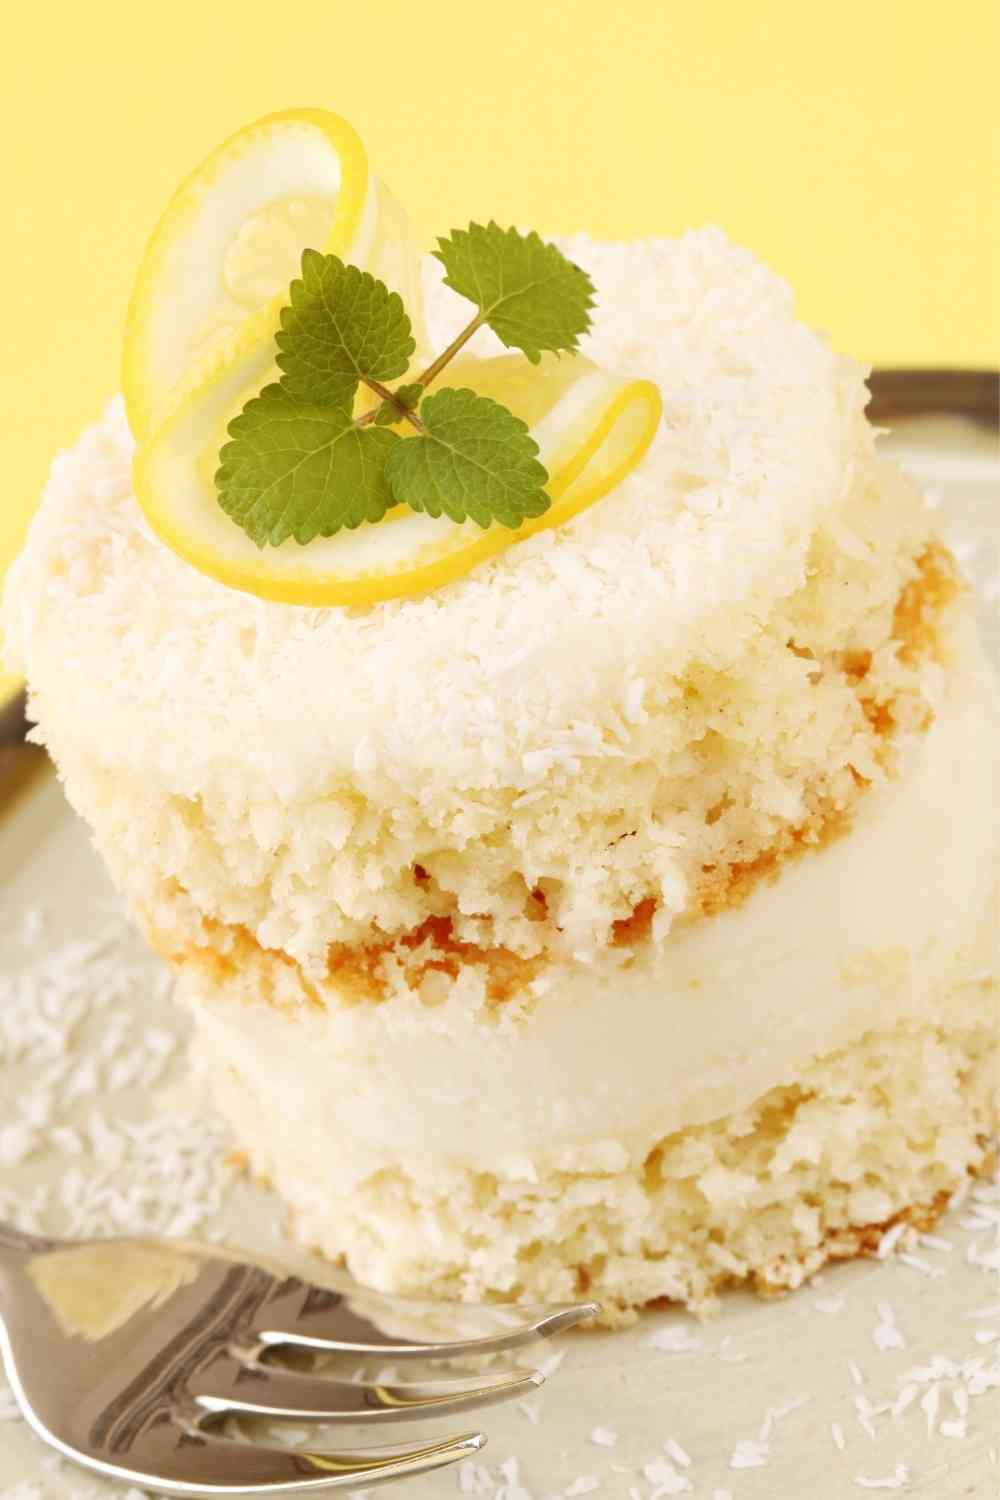 Coconut lemon cake